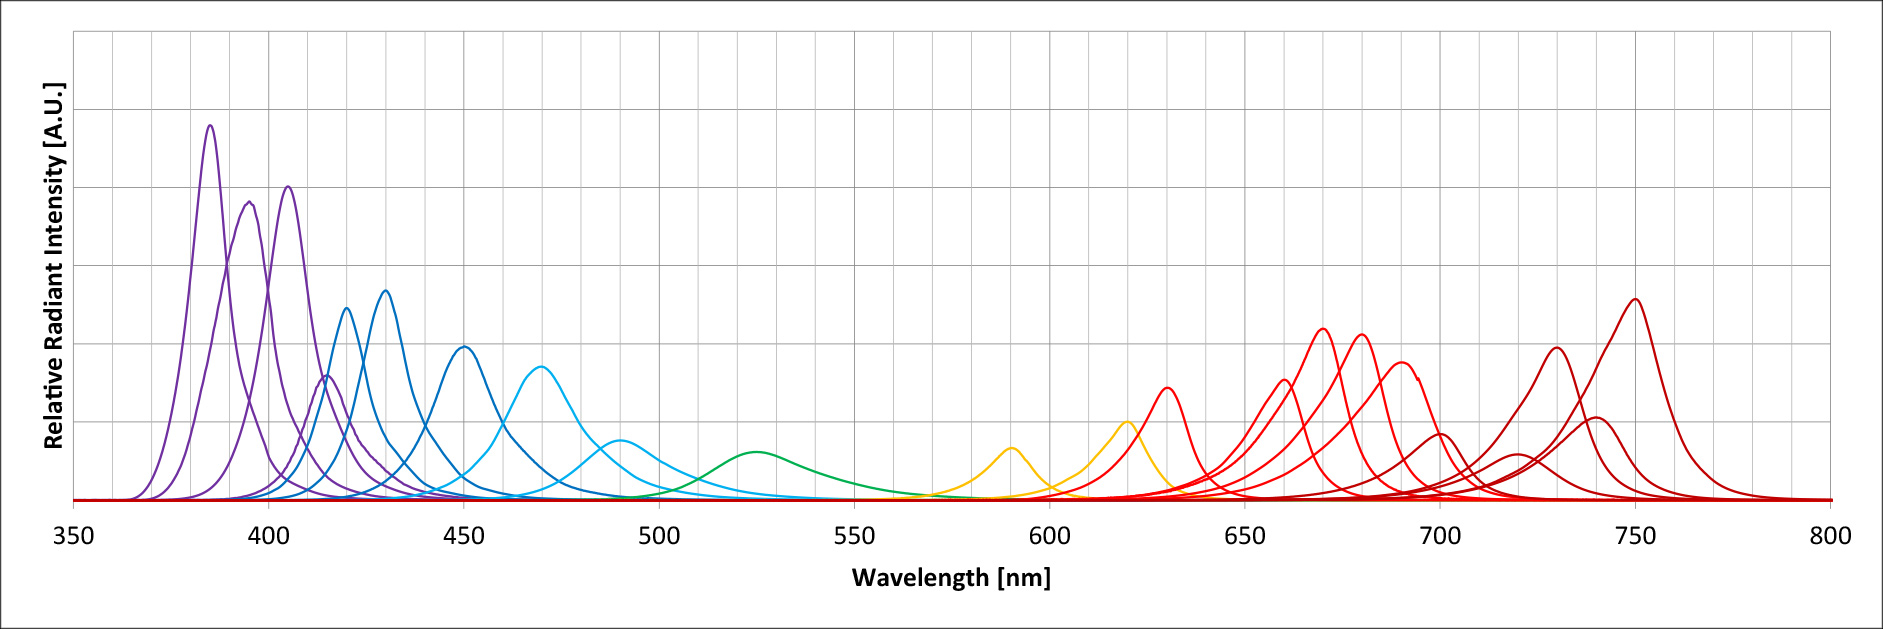 epitex UV Wavelengths Lineup